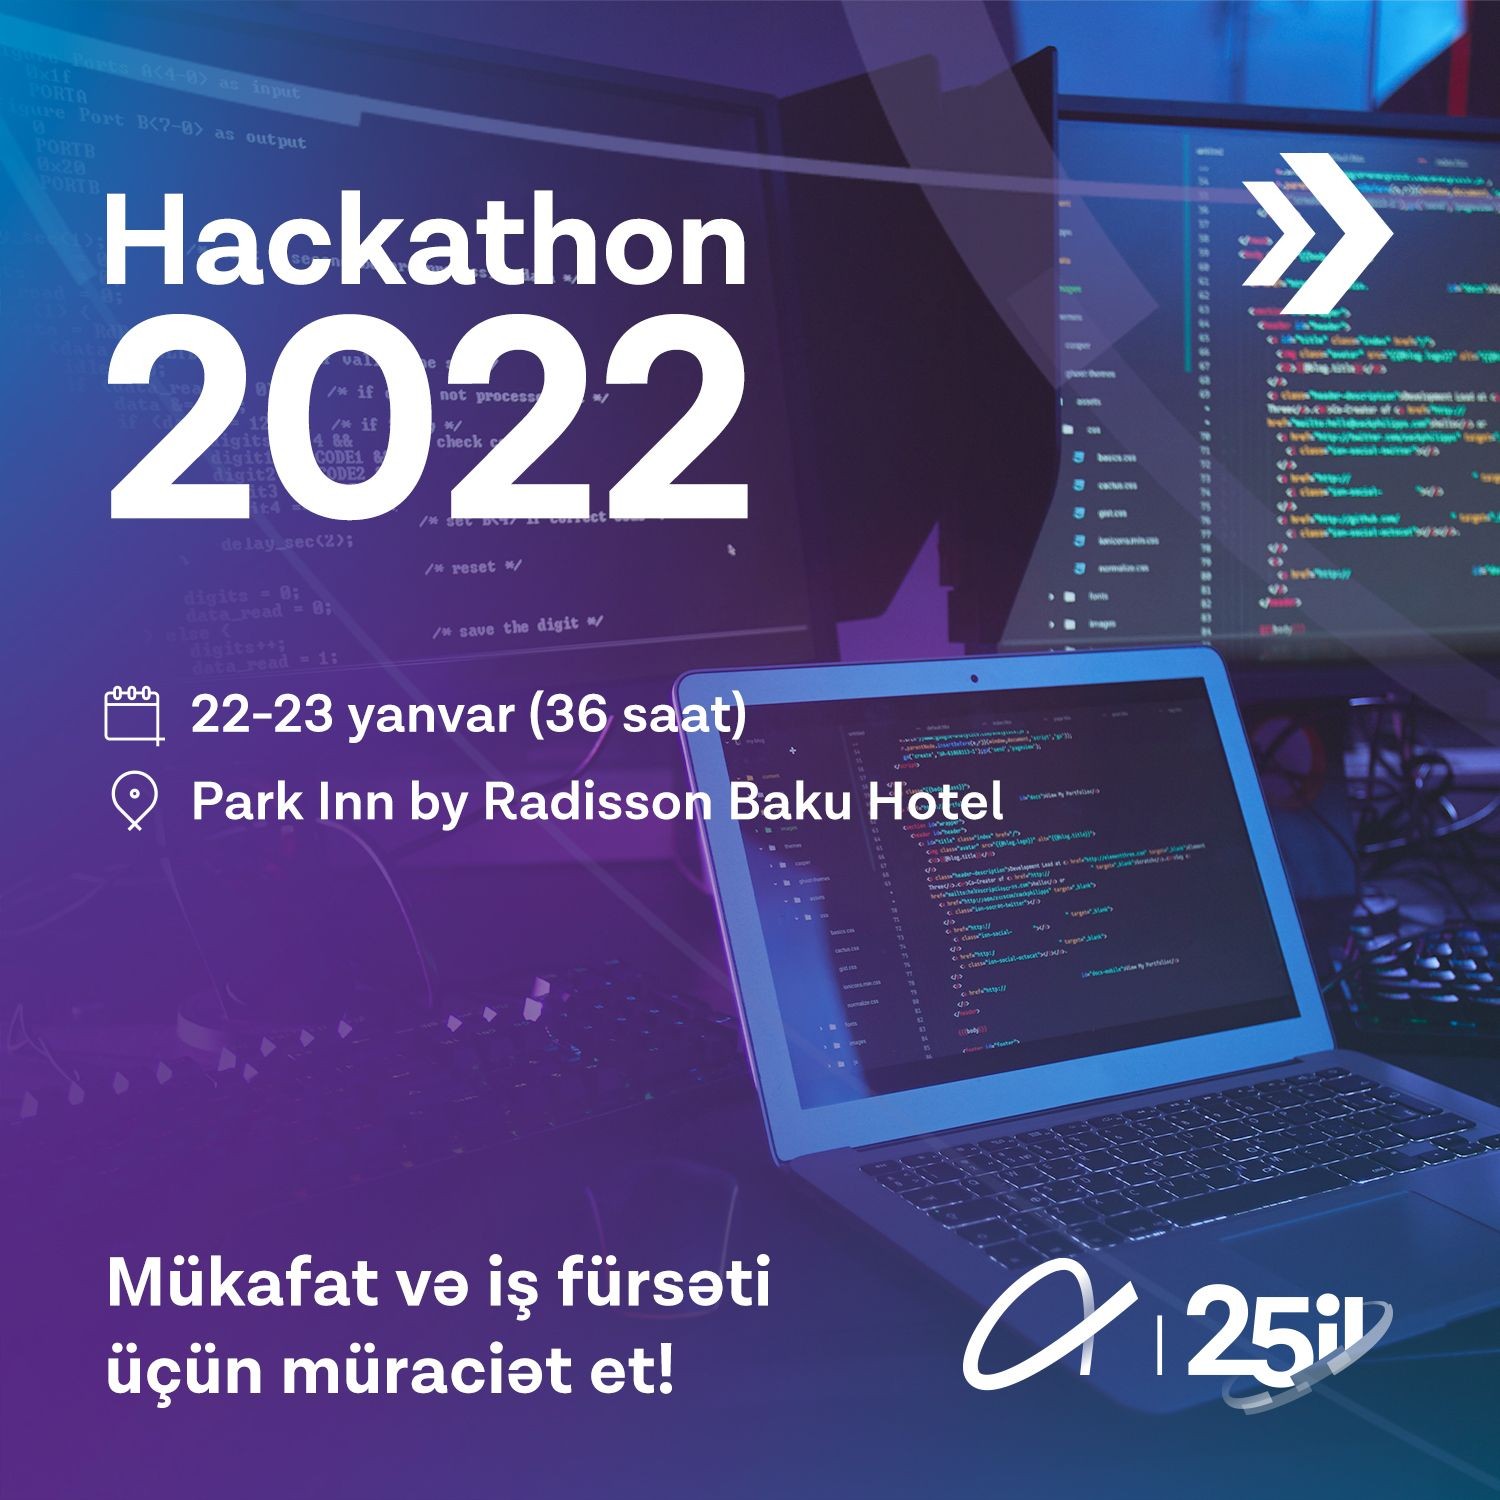 azercell-hackathon-2022-nin-secim-merhelesi-baslayir--